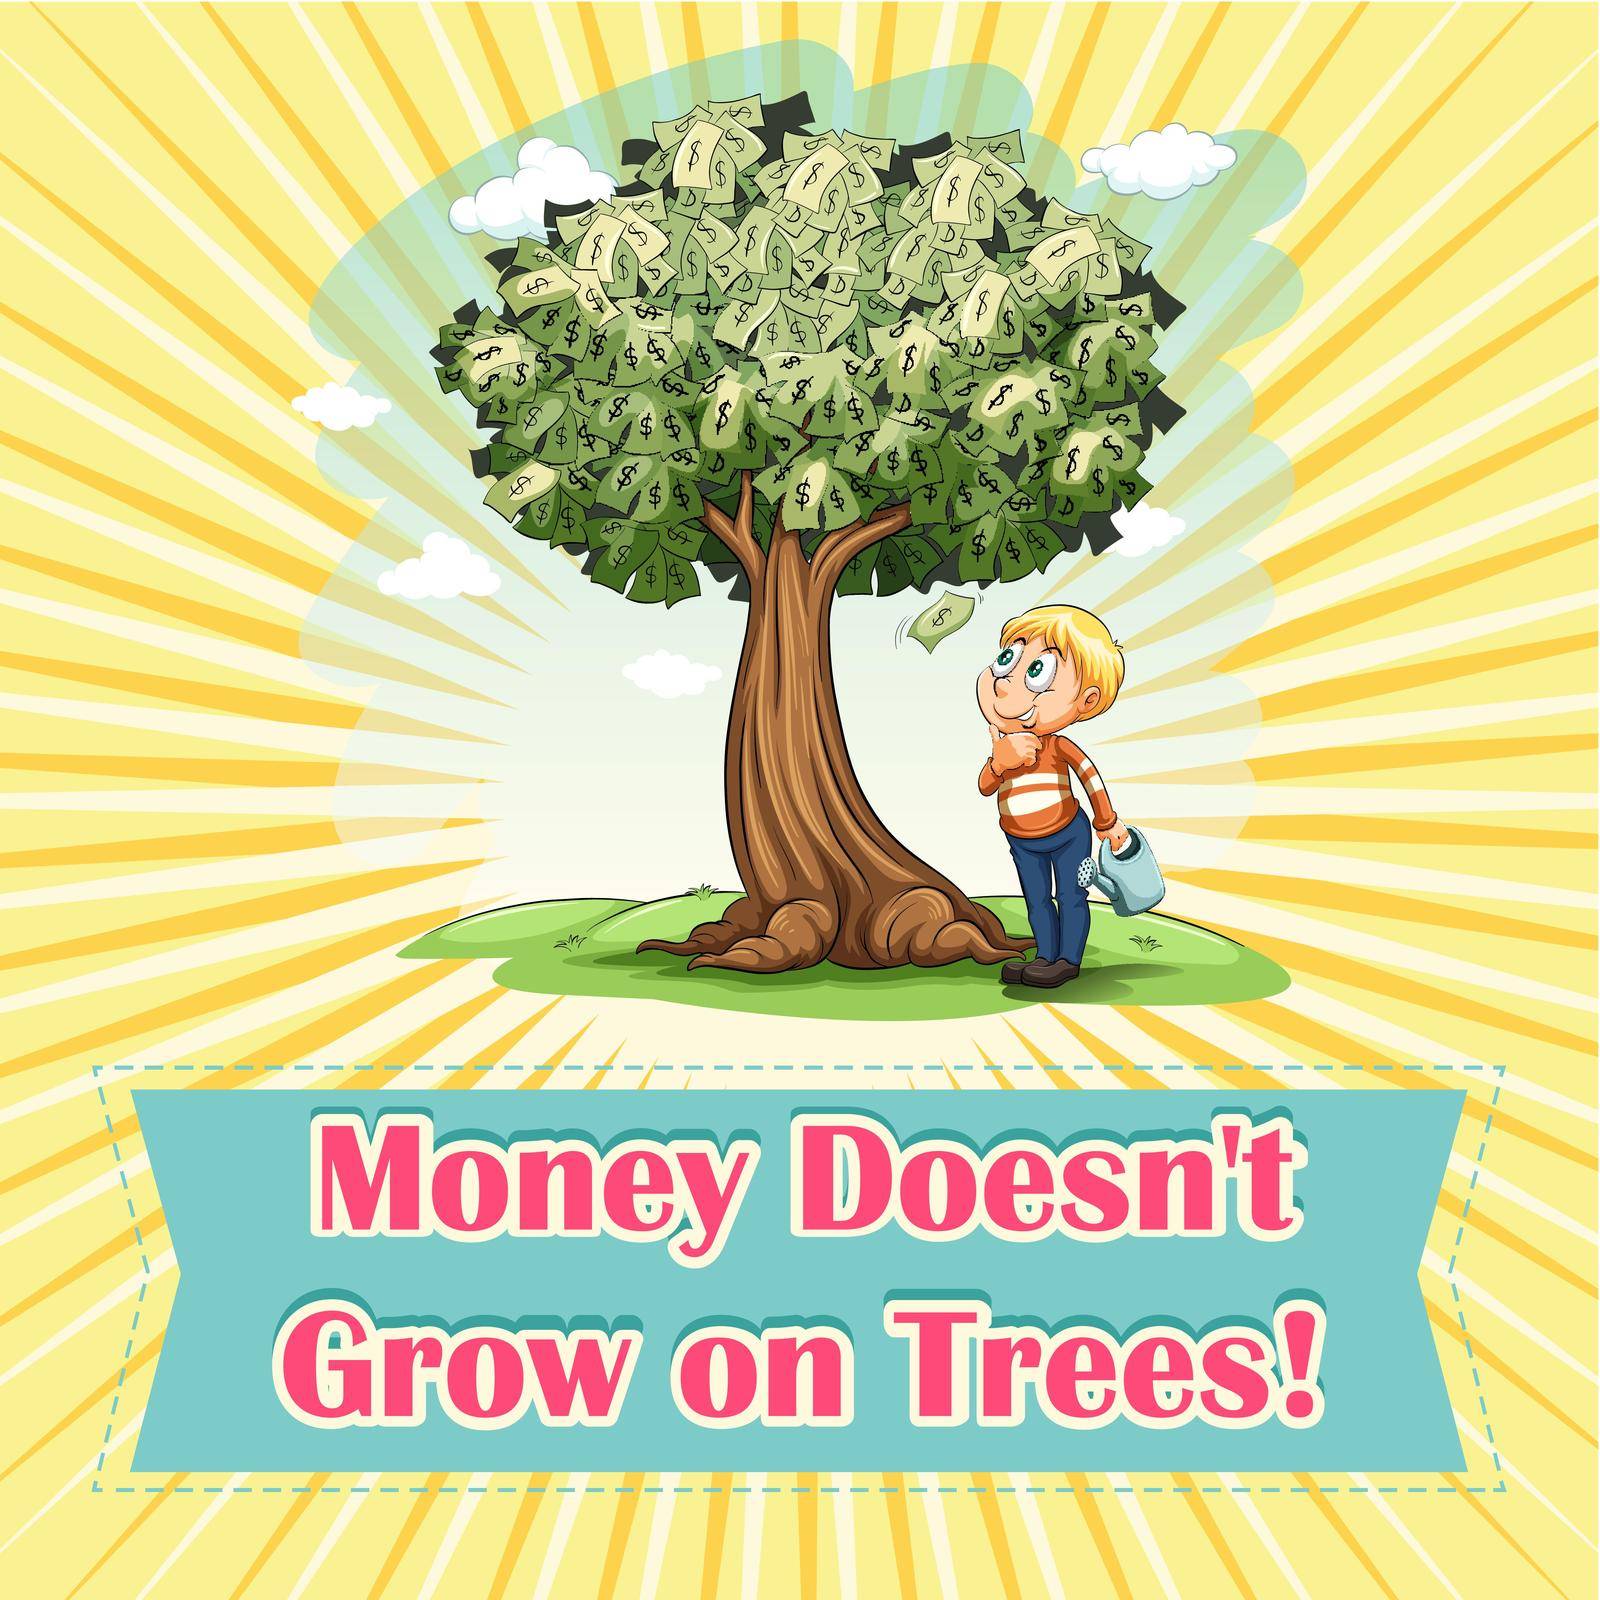 Money doesn't grow on trees illustration